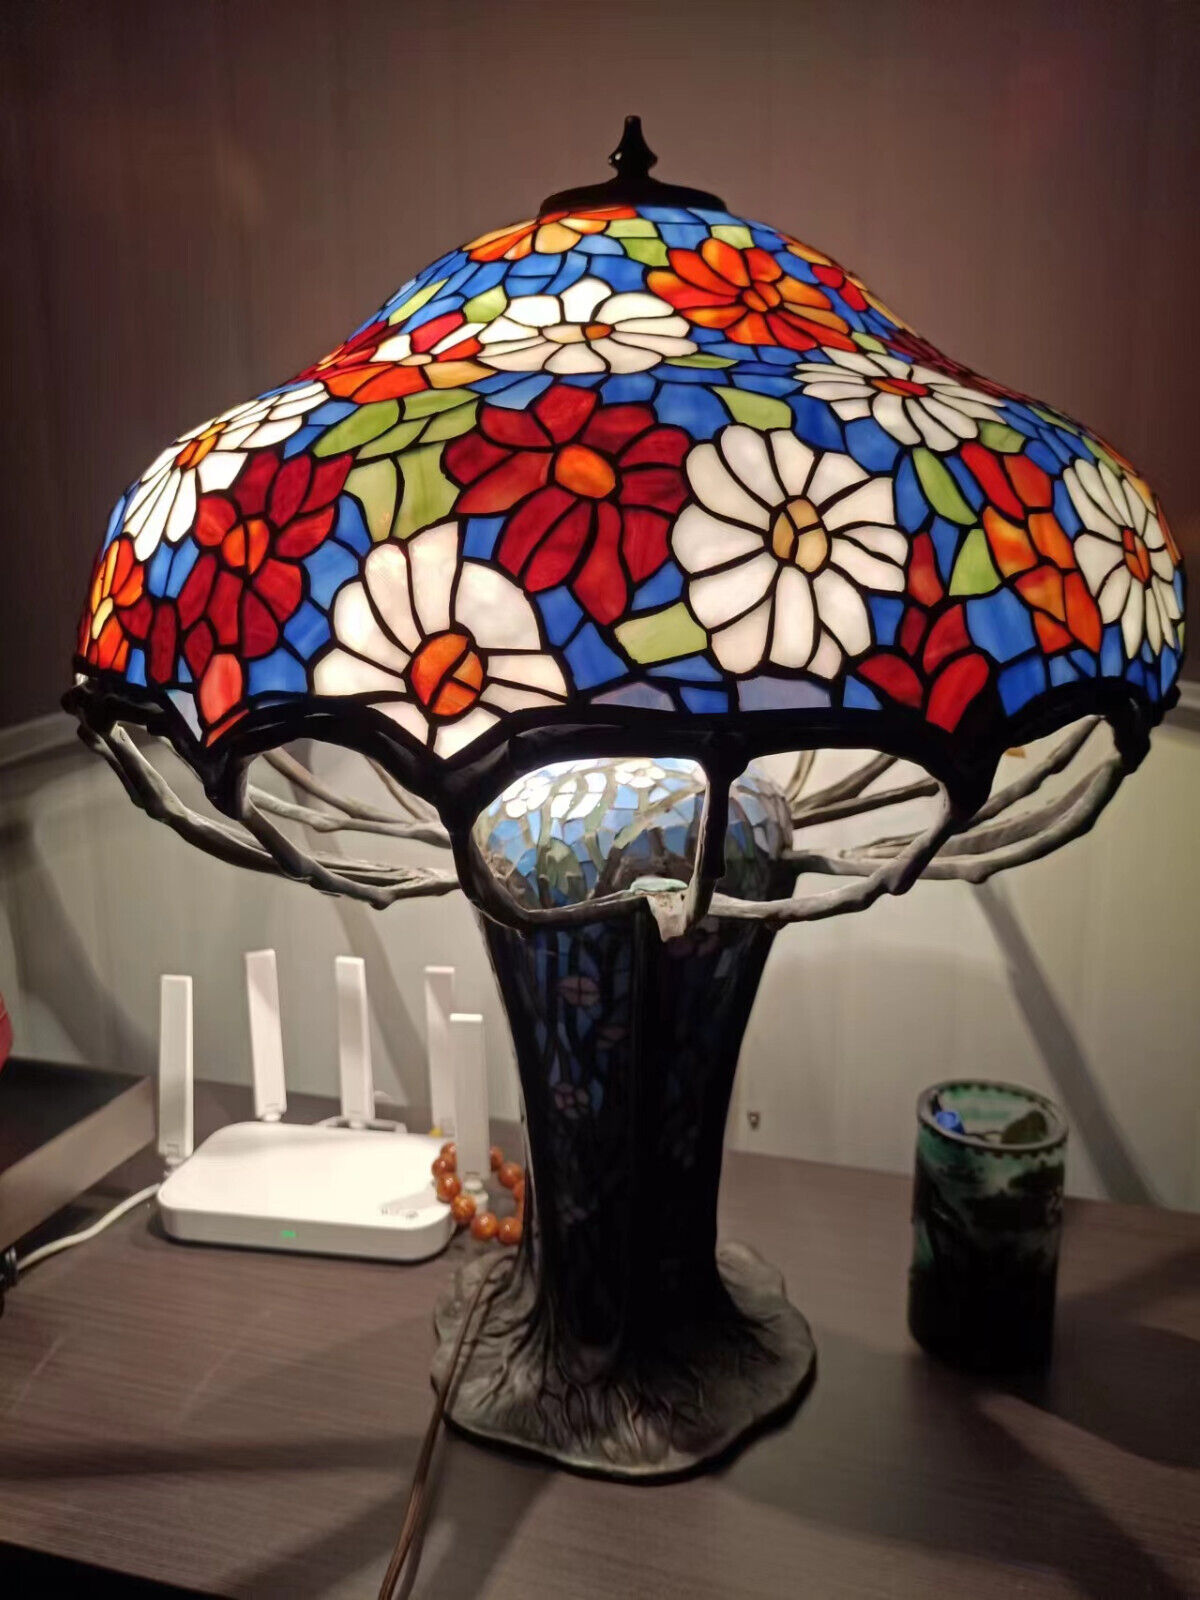 Antique Tiffany style table lamp replica